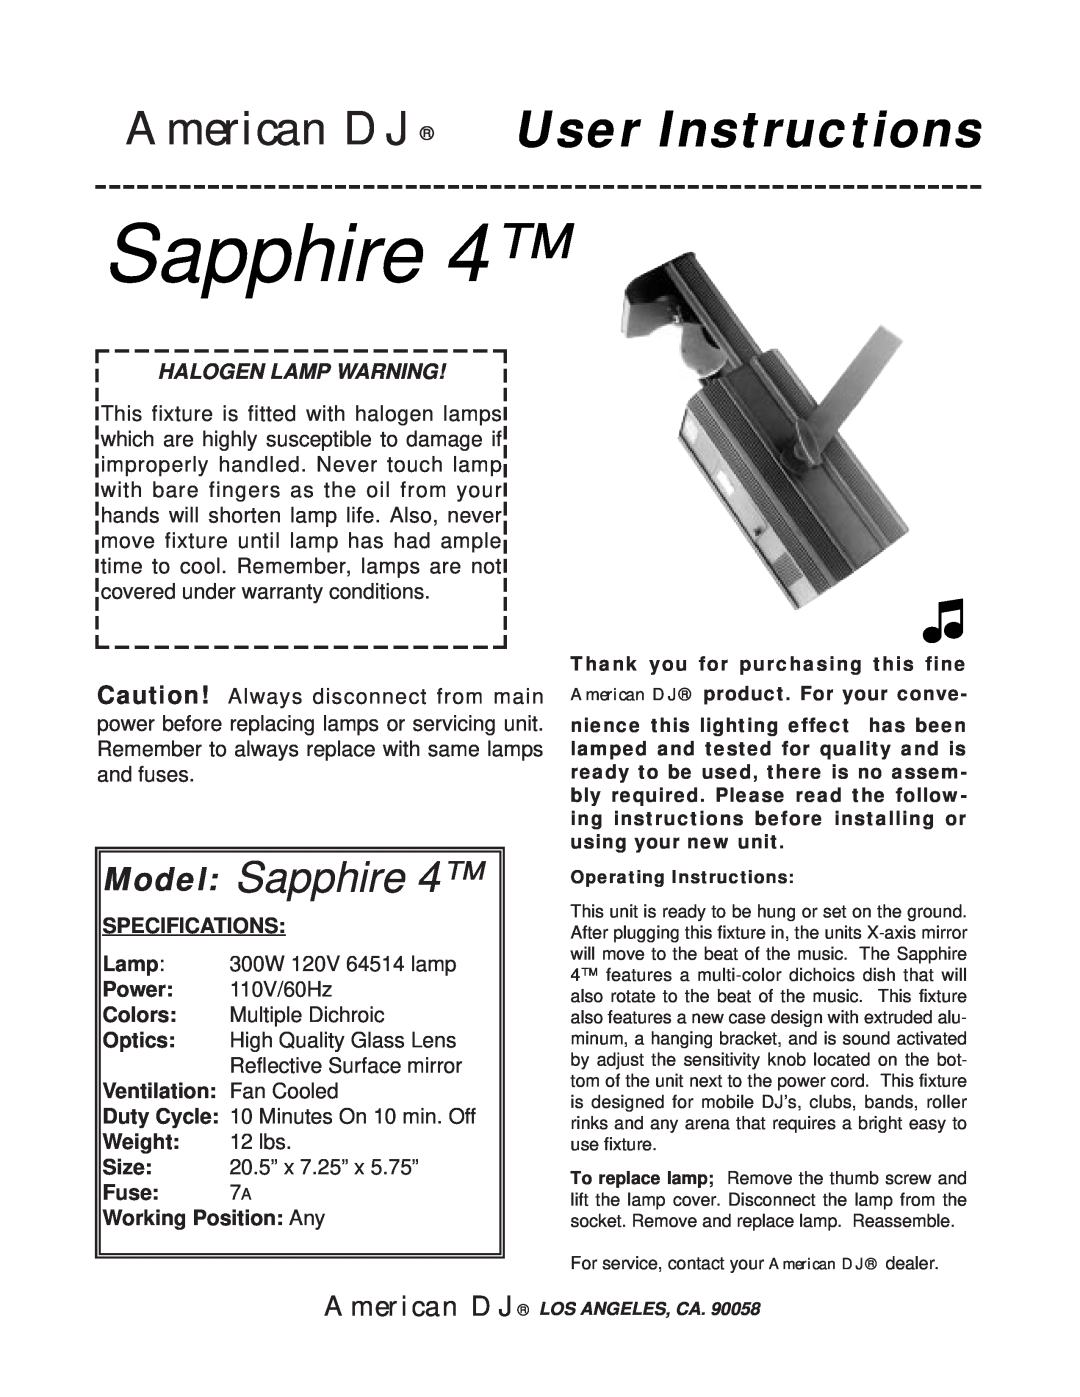 American DJ Sapphire 4 specifications American DJ User Instructions, Model Sapphire, Halogen Lamp Warning 